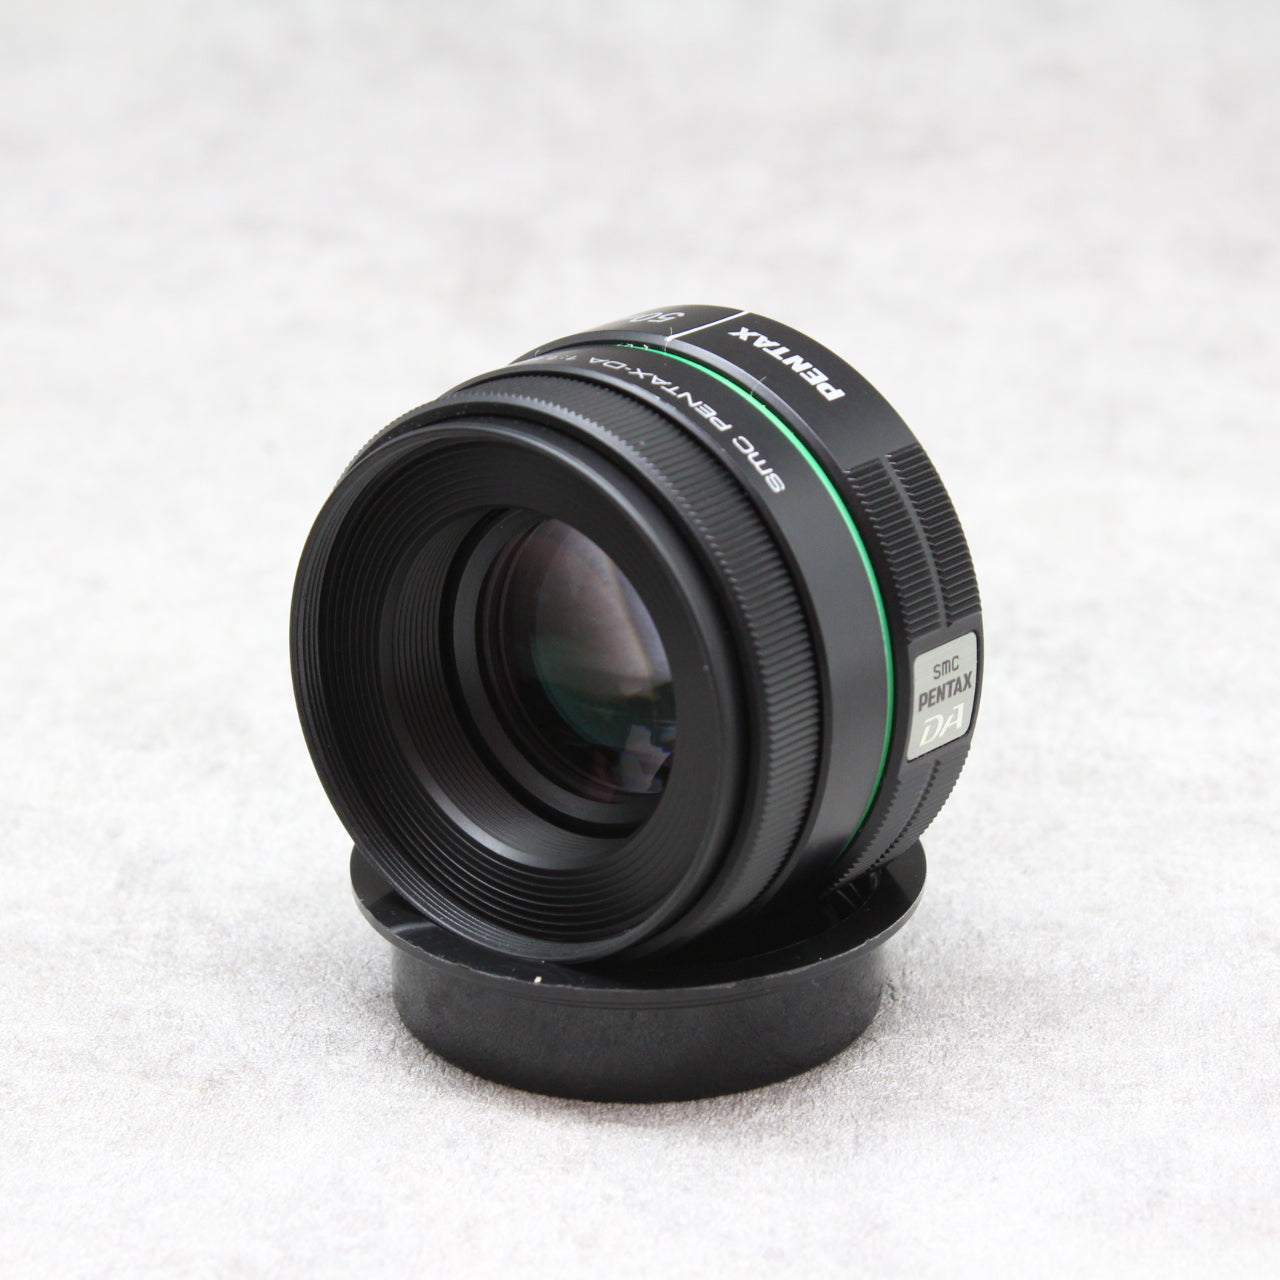 PENTAX -KX / SMC 50mm F/1.8 レンズセット【#139】